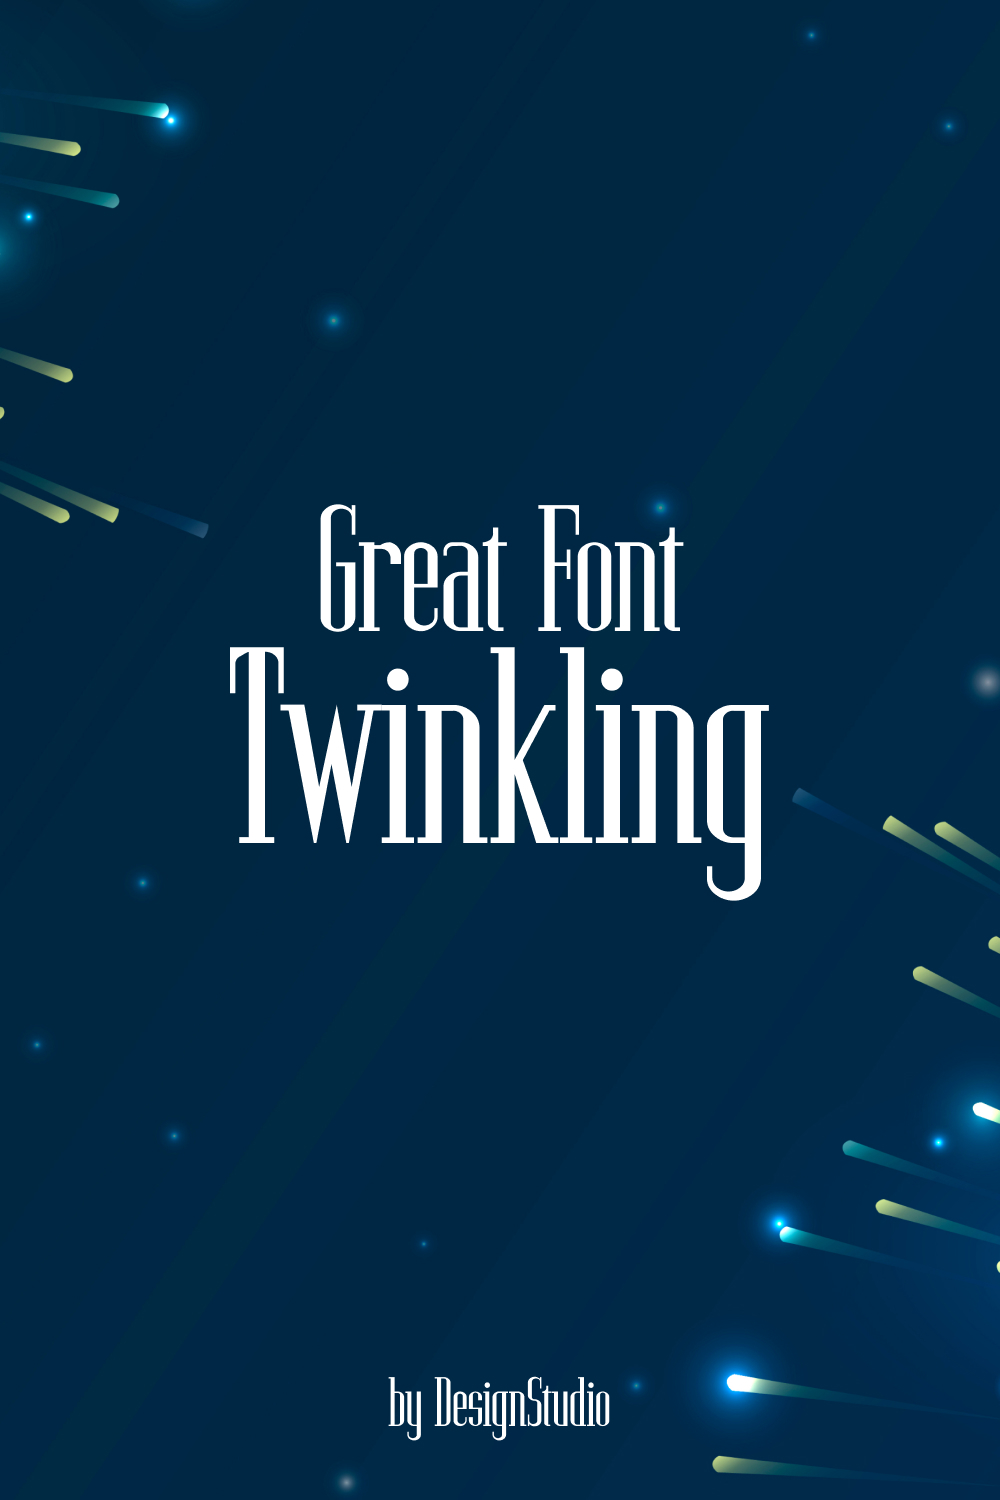 Twinkling Monospaced Serif Font Pinterest Preview.